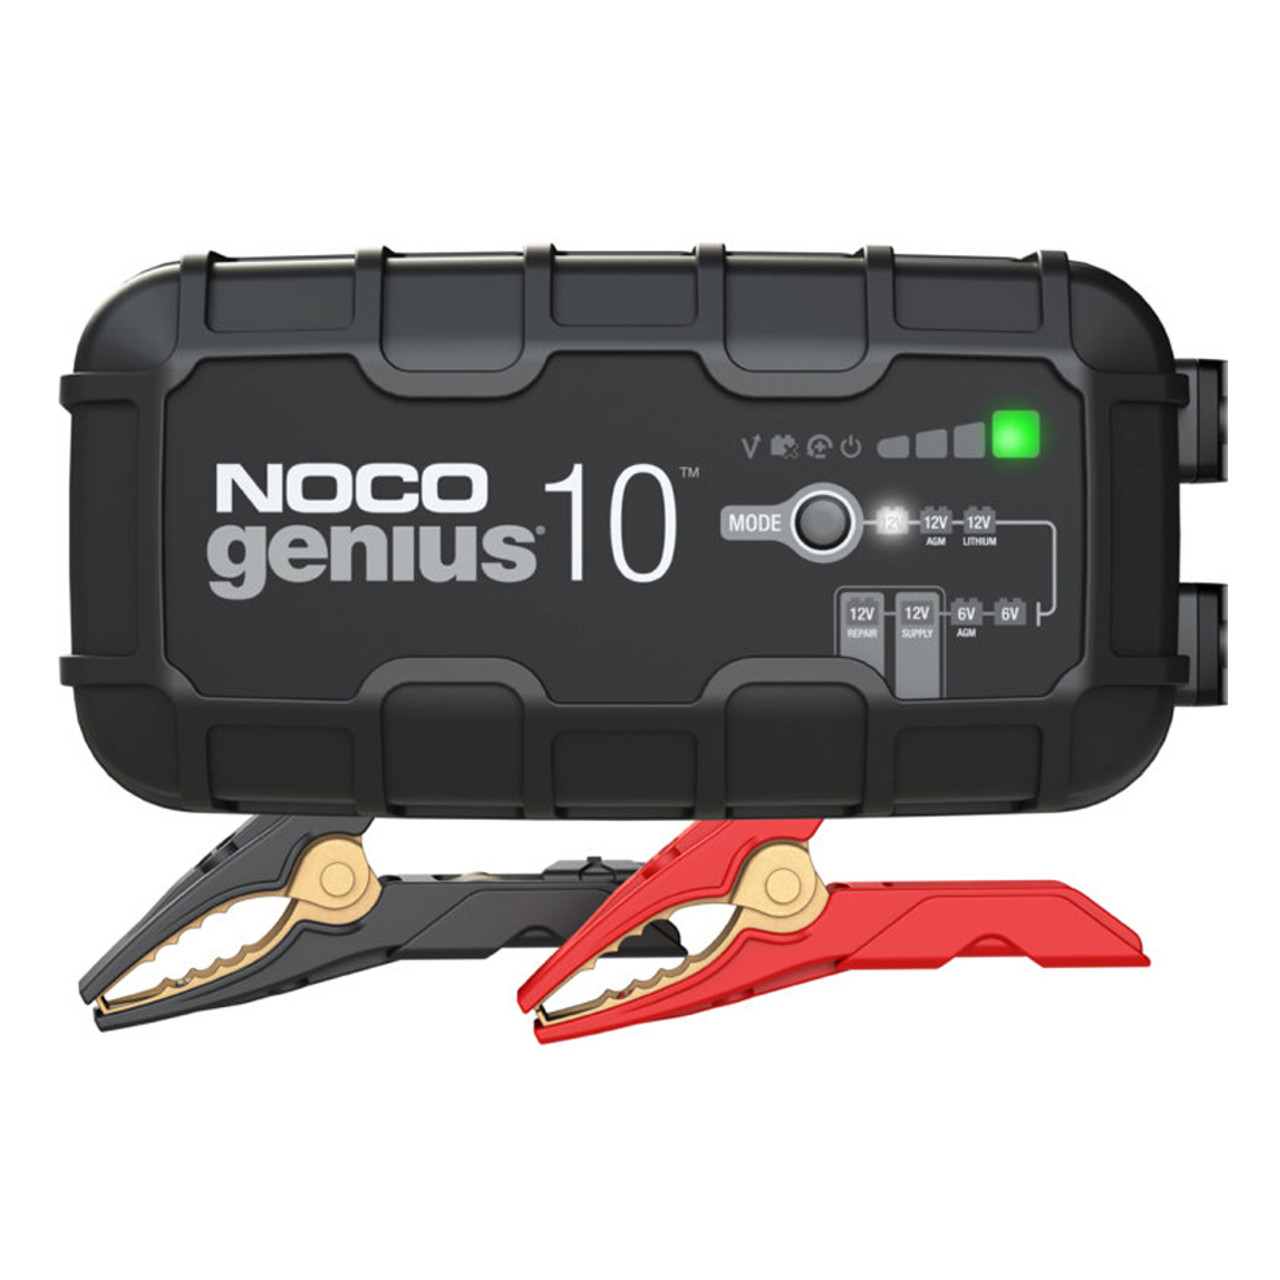 Noco Battery Charger 10 Amp  - NOCGENIUS10